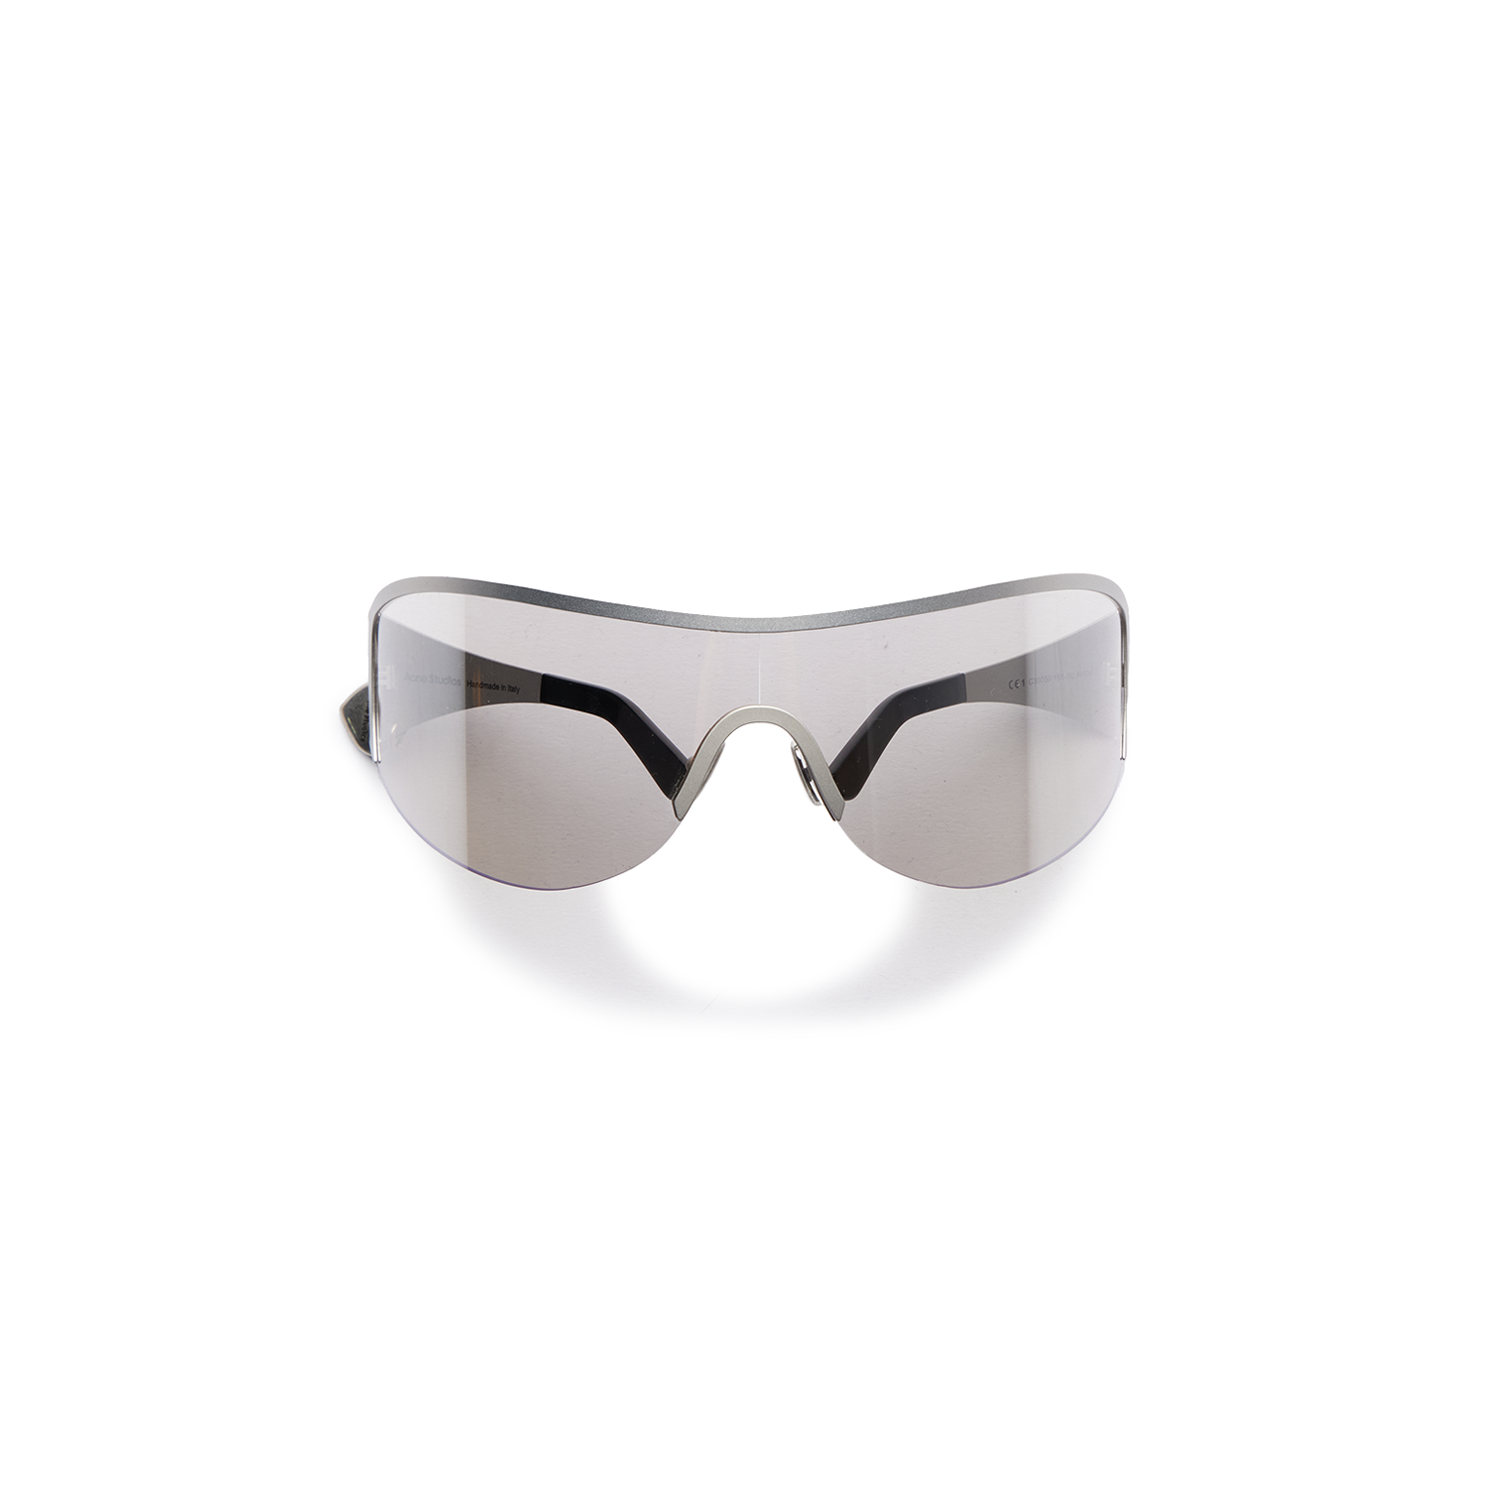 ACNE STUDIOS - Metal Frame Sunglasses (Silver) product image